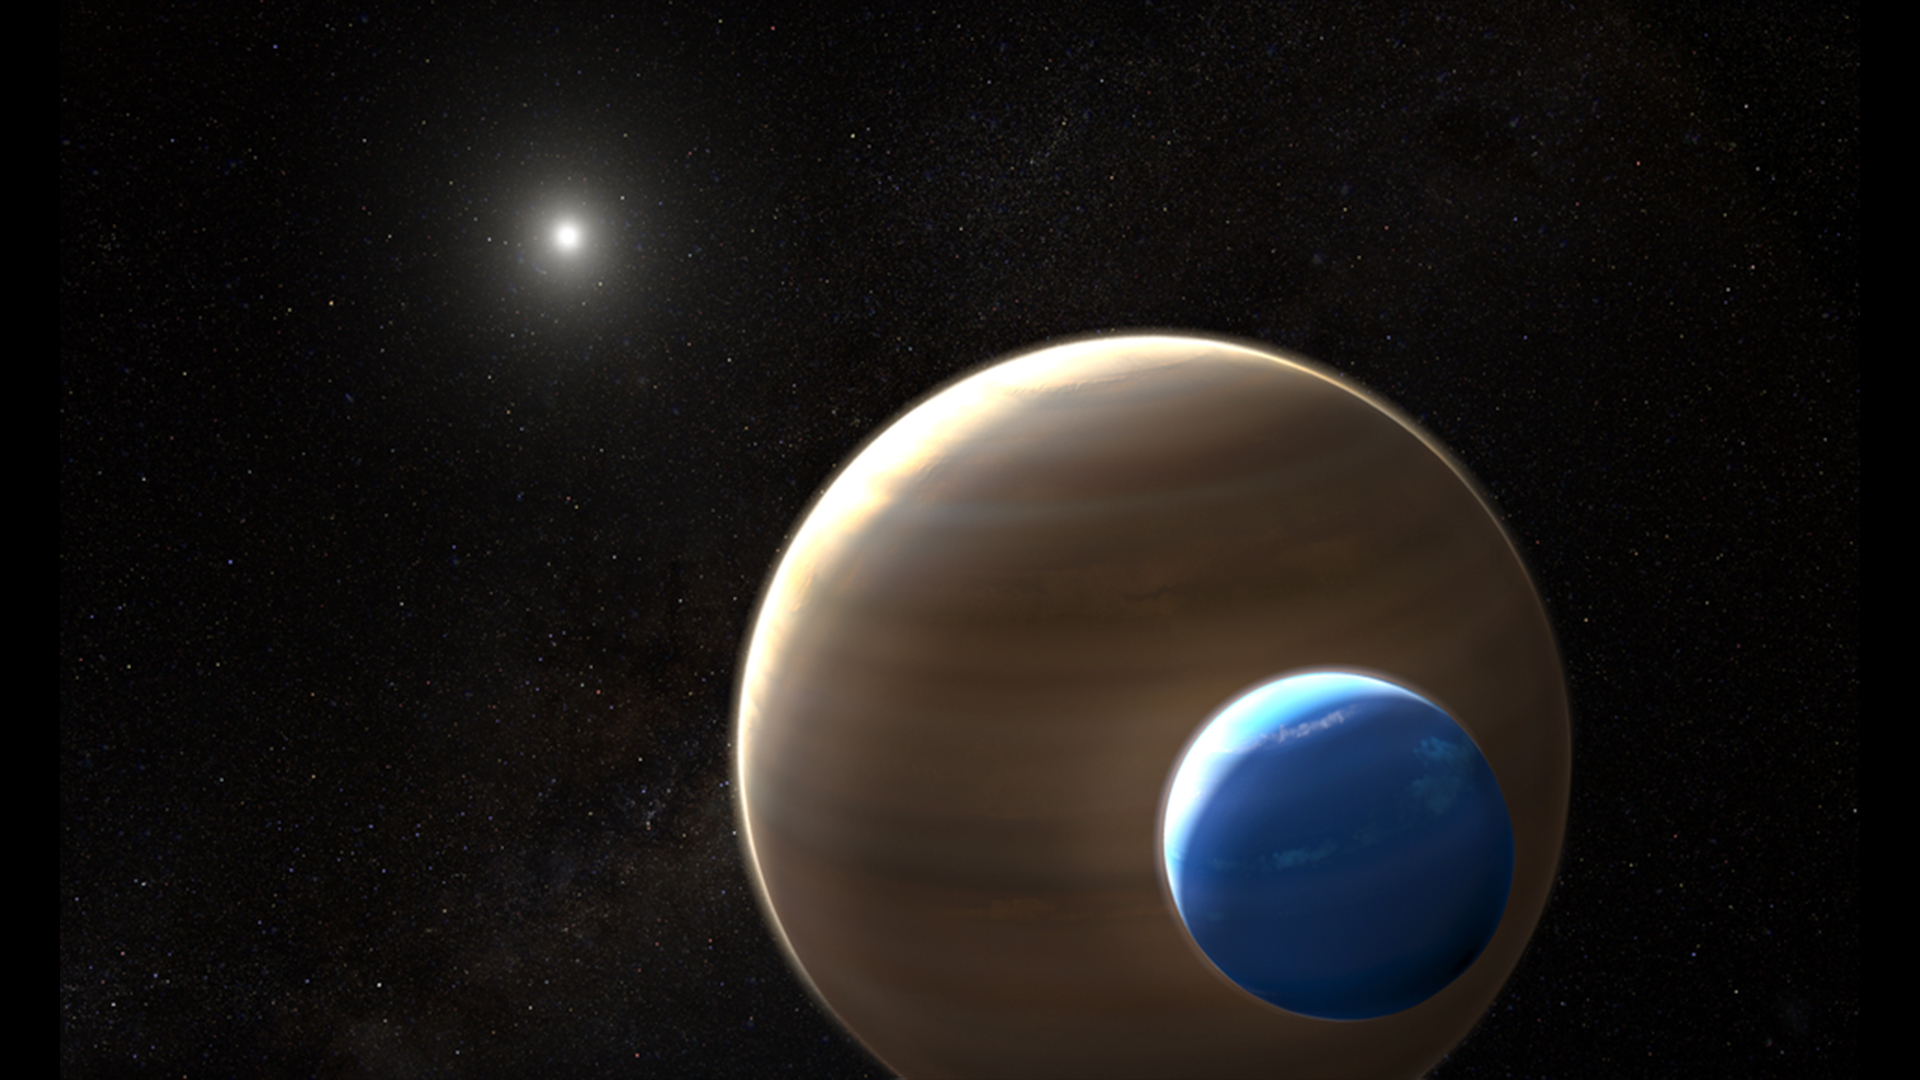 An artist's illustration of an exomoon around an exoplanet.